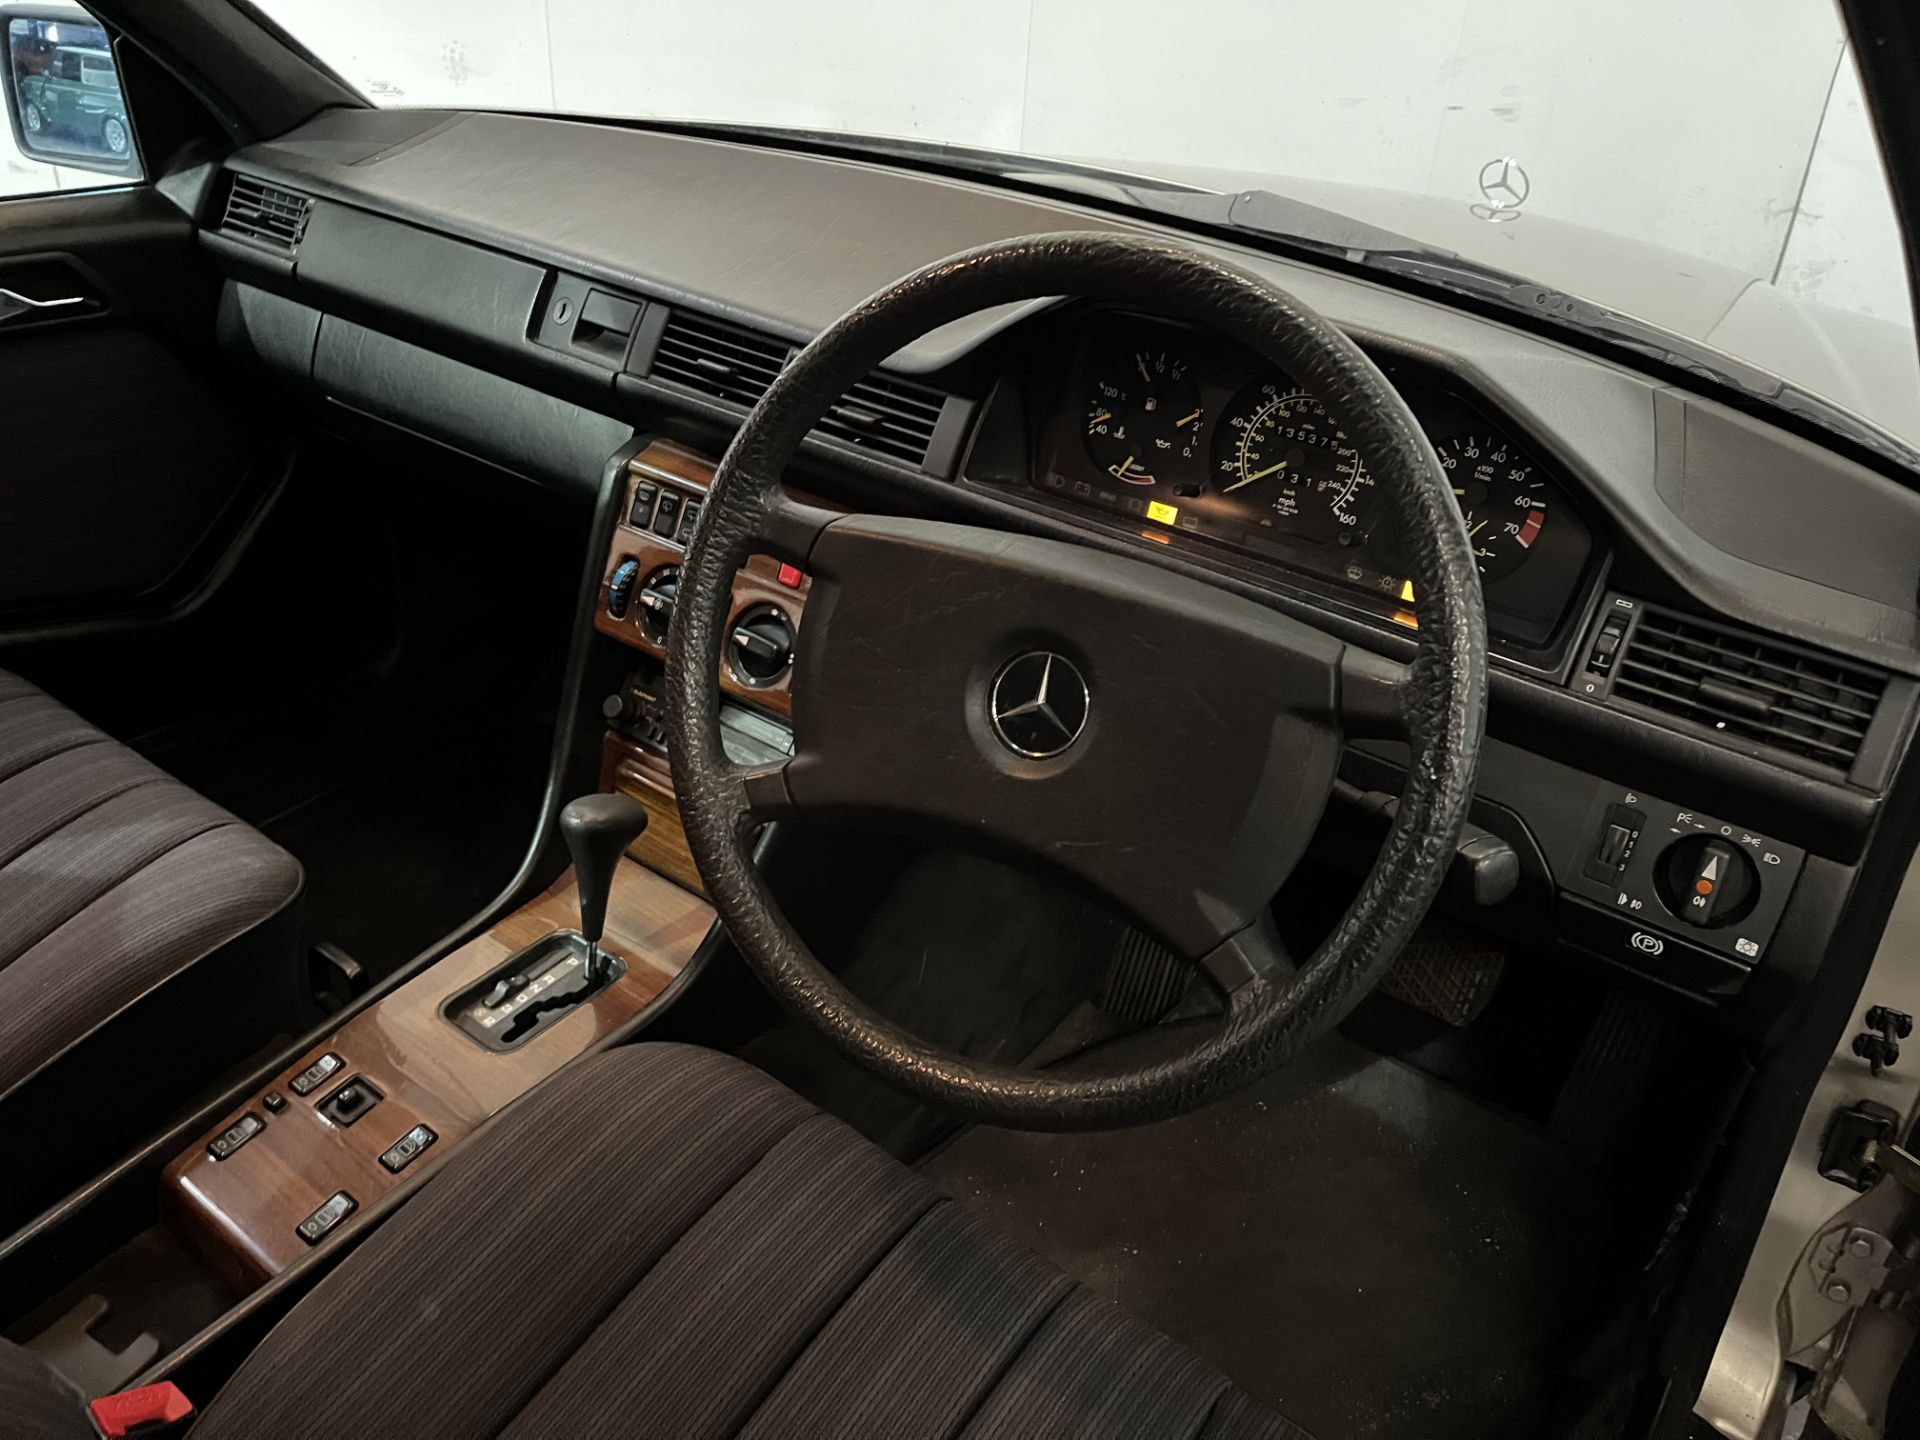 1987 Mercedes 300TE Auto - 2962cc - Image 9 of 19